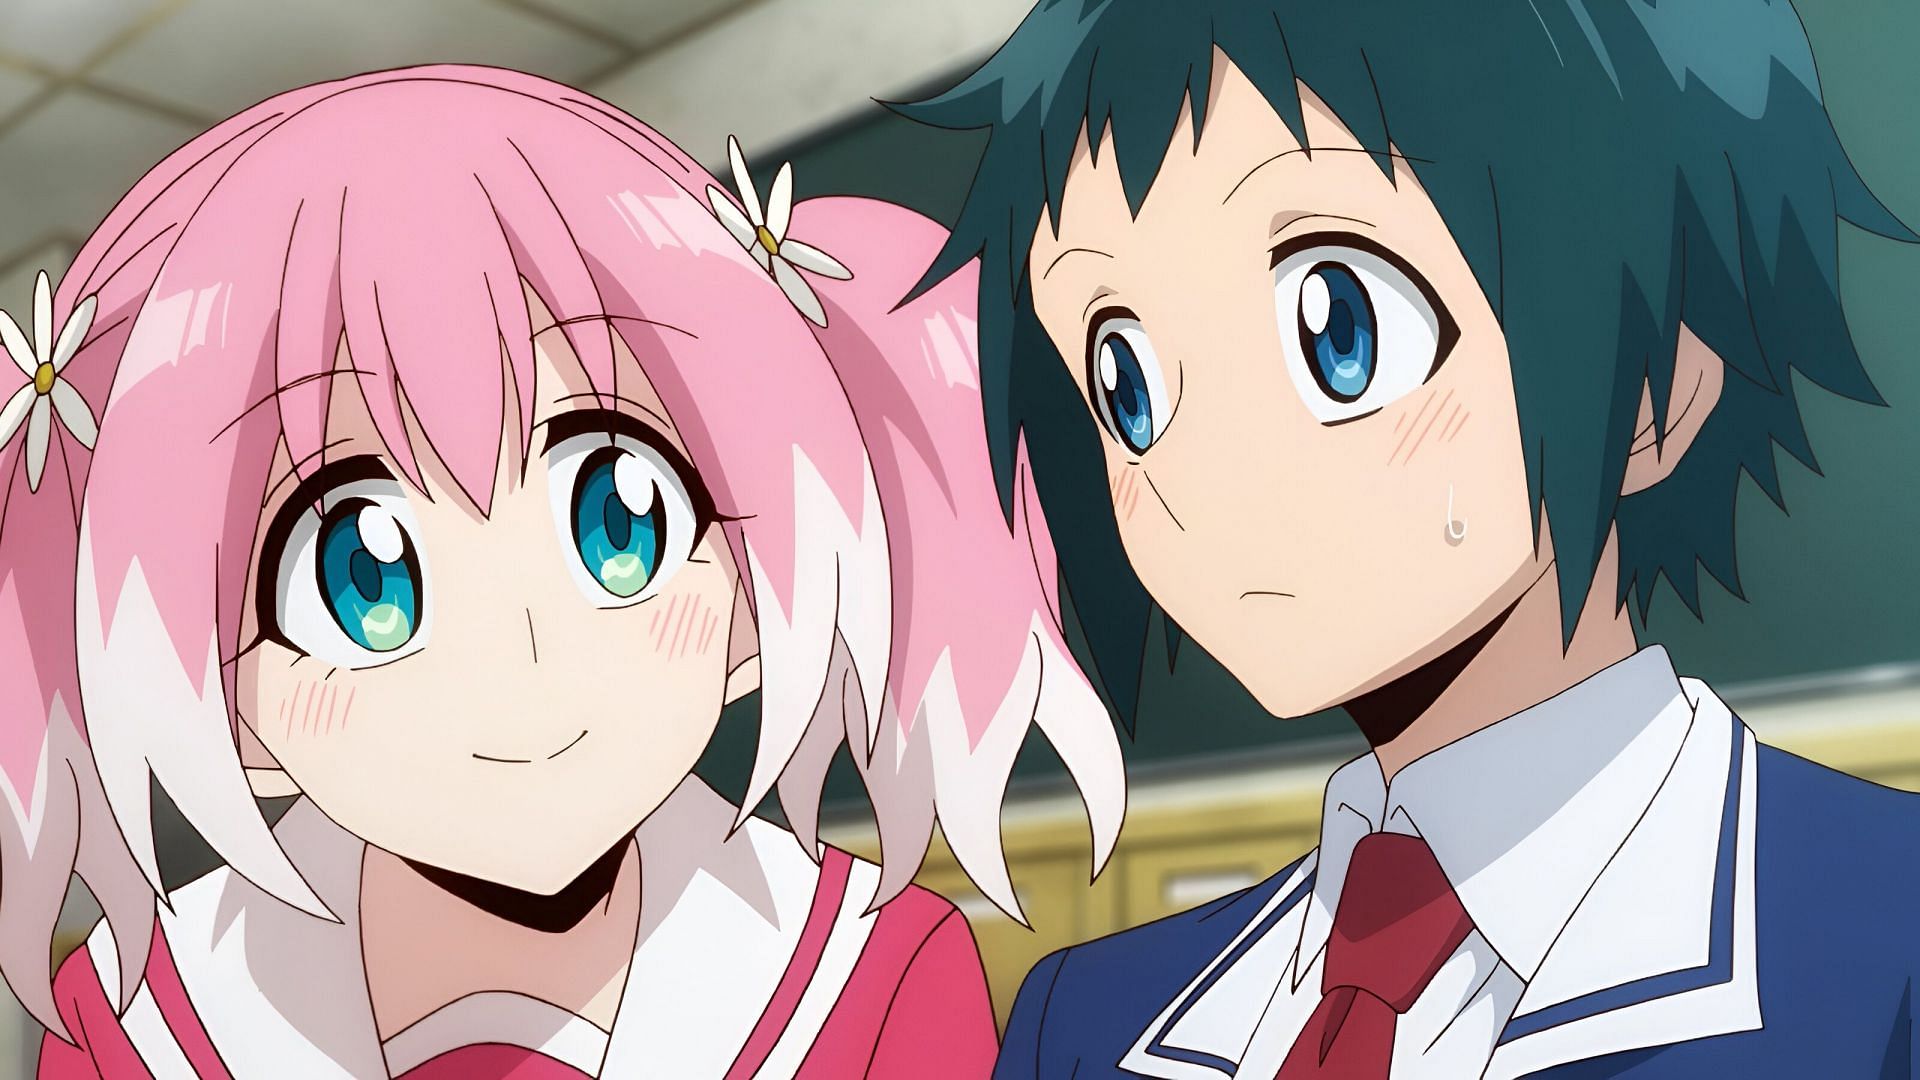 Nana (left) and Nanao (right) as seen in the anime (Image via Bridge)